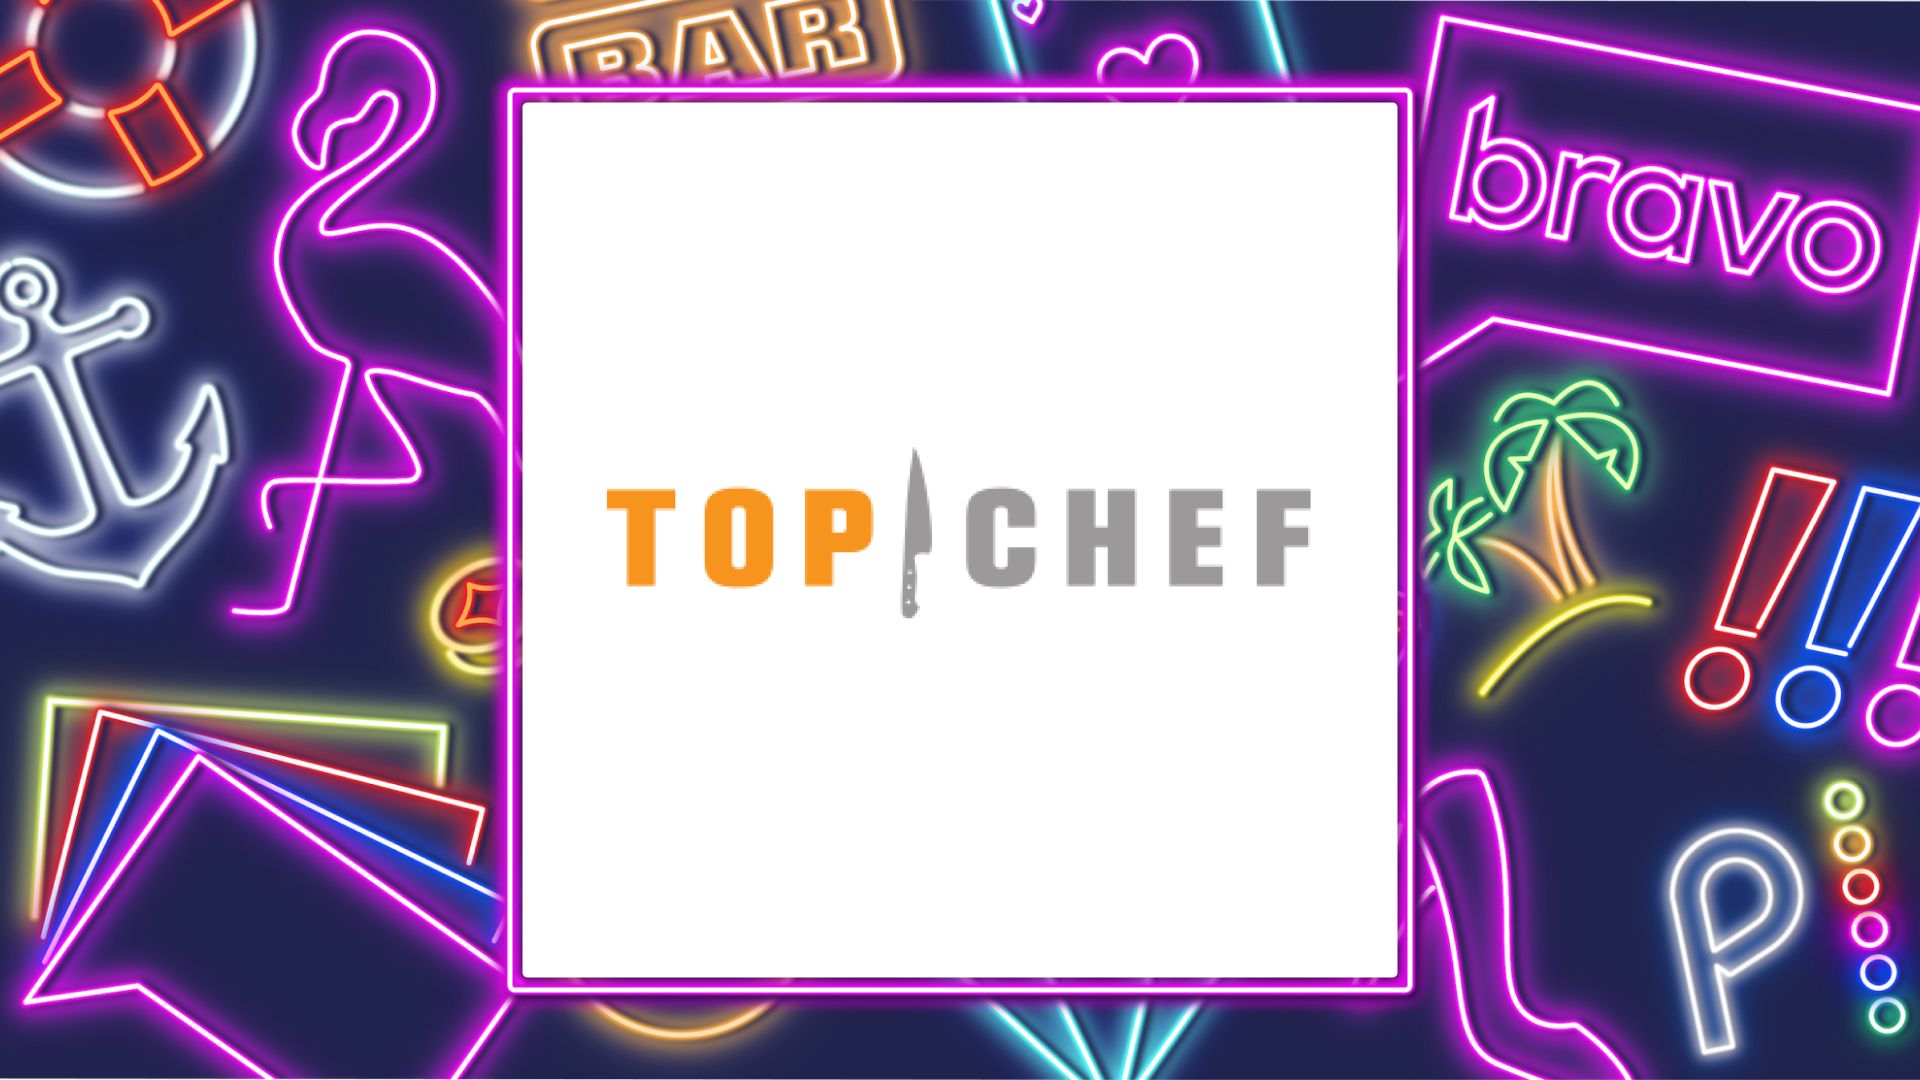 v2 - Top Chef Mobile.jpg